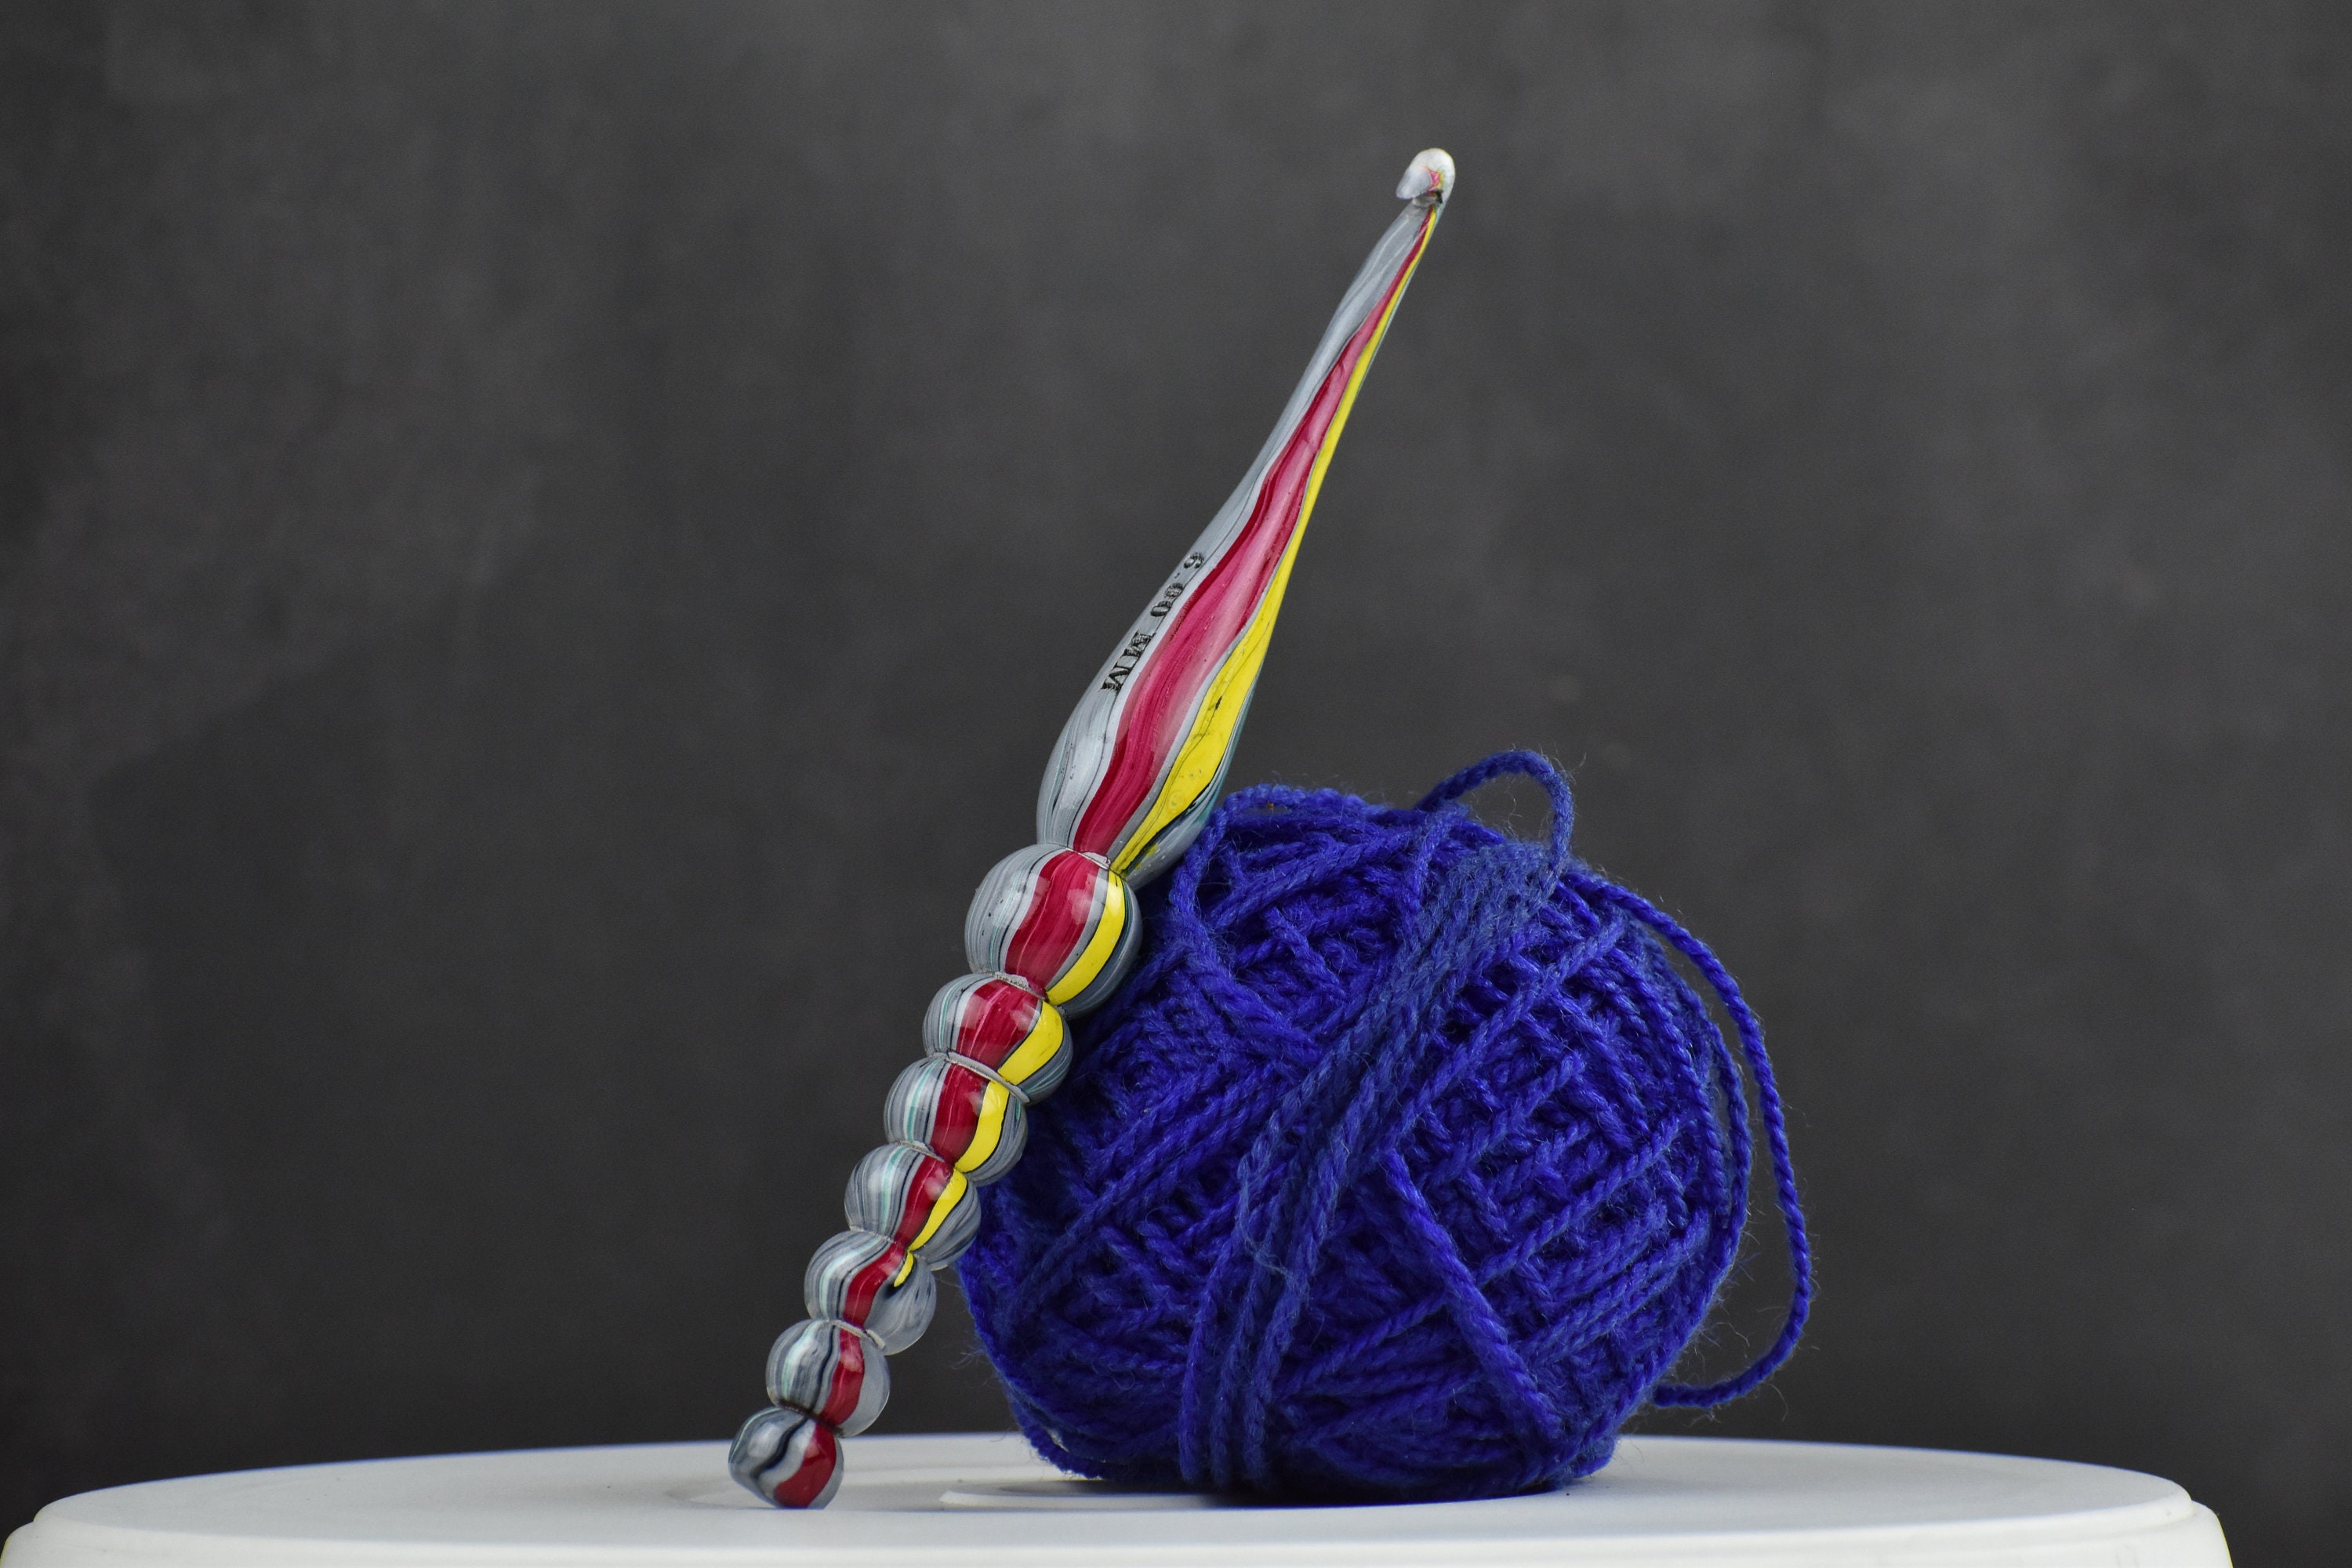 Crochet Hook 4.5mm, Crochet Needle, Needle, Knitting Needle, Knitting Hook,  Patterned Crochet Needle, Amigurumi and Knitting 